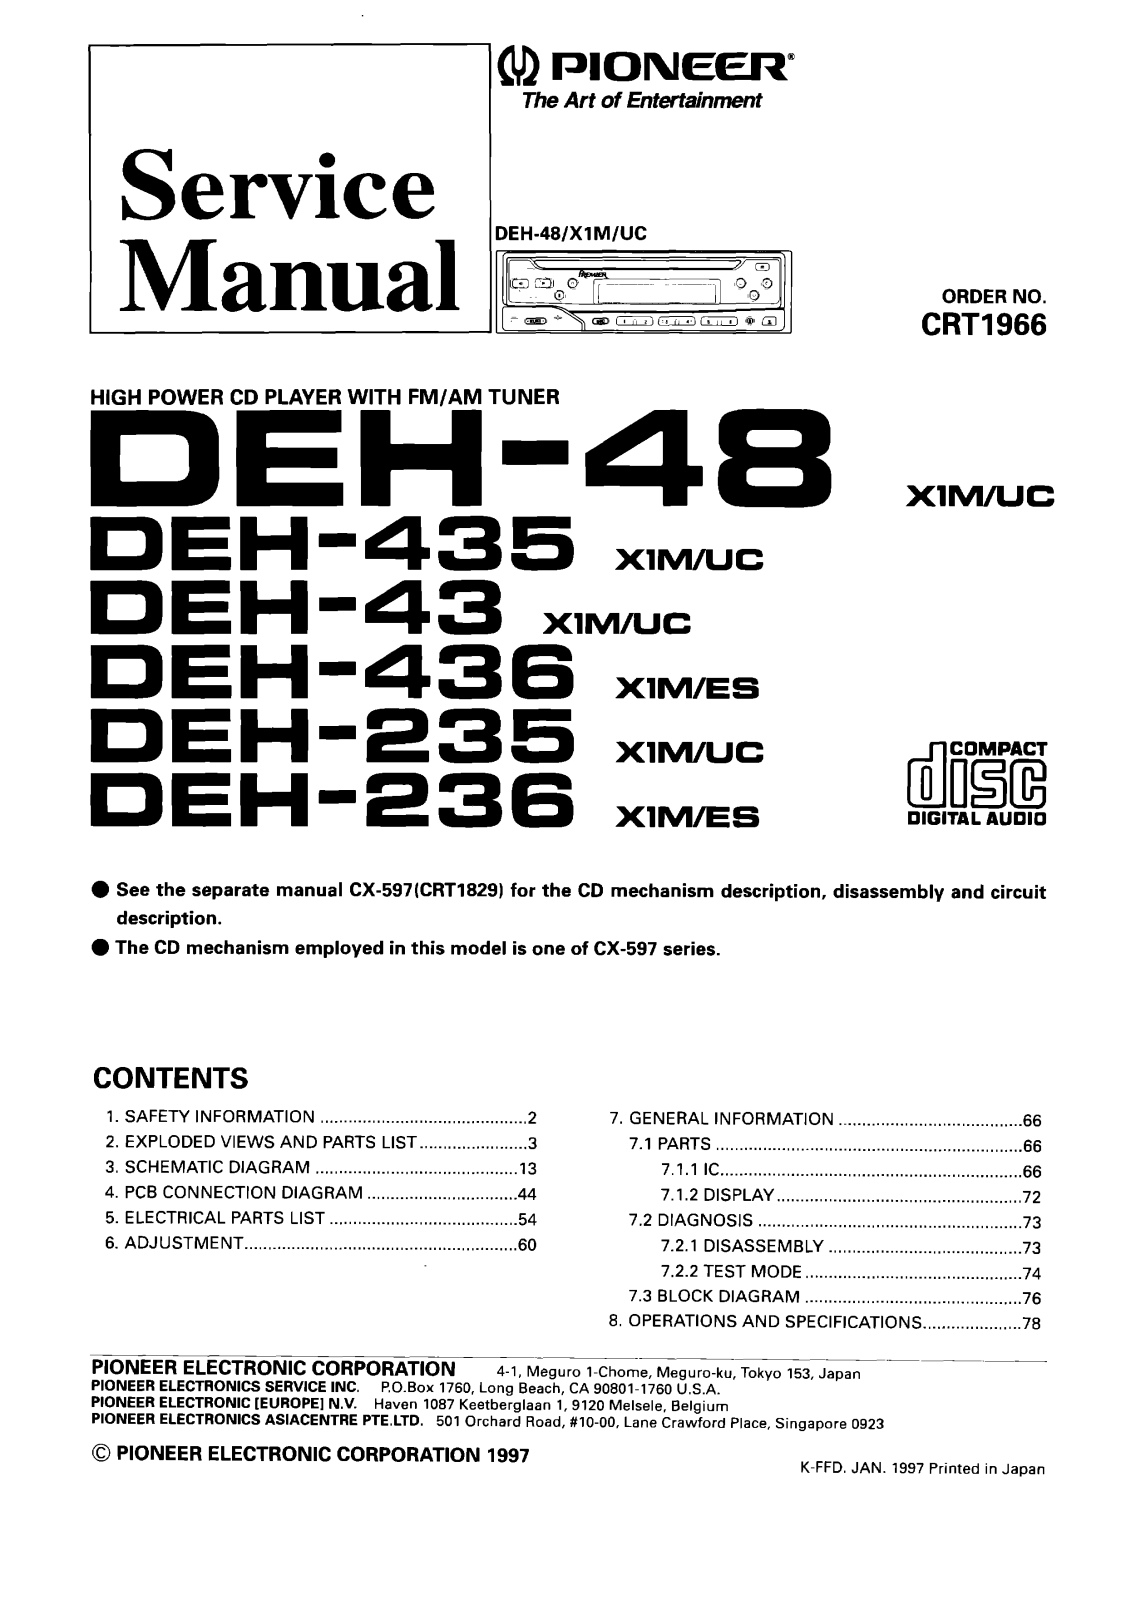 Pioneer DEH-235, DEH-236, DEH-43, DEH-435, DEH-436 Service manual